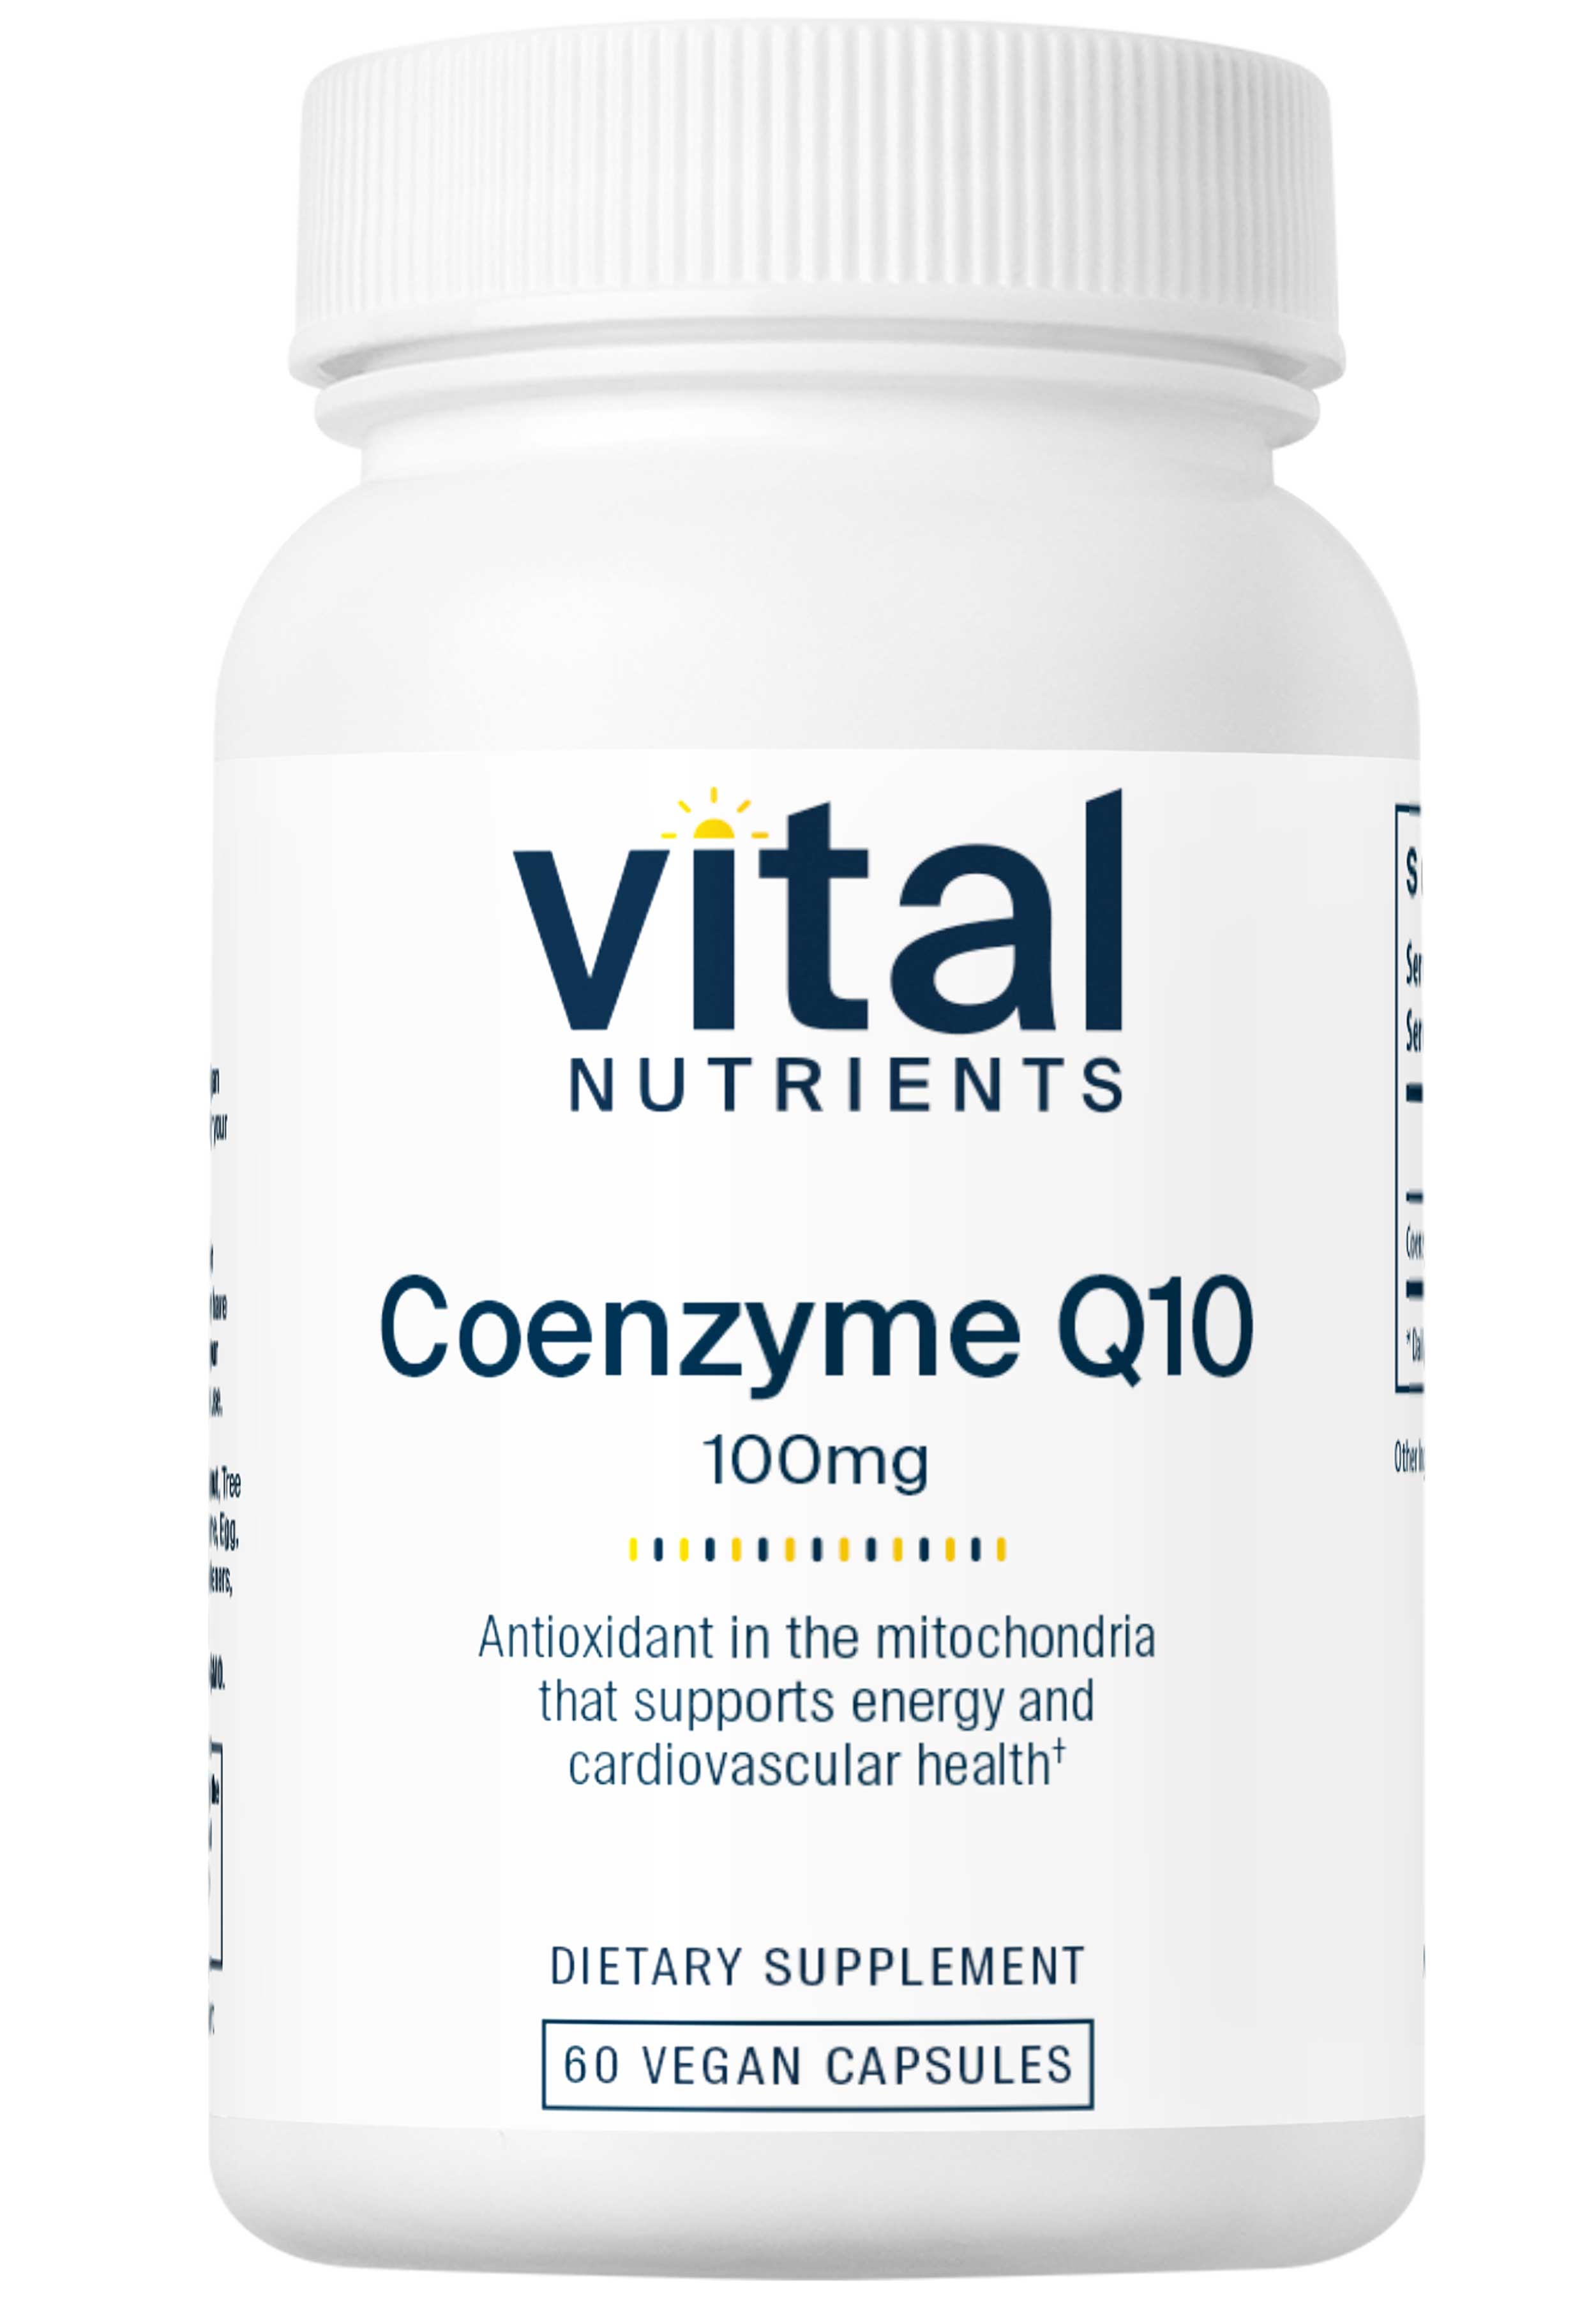 Vital Nutrients CoEnzyme Q10 100mg